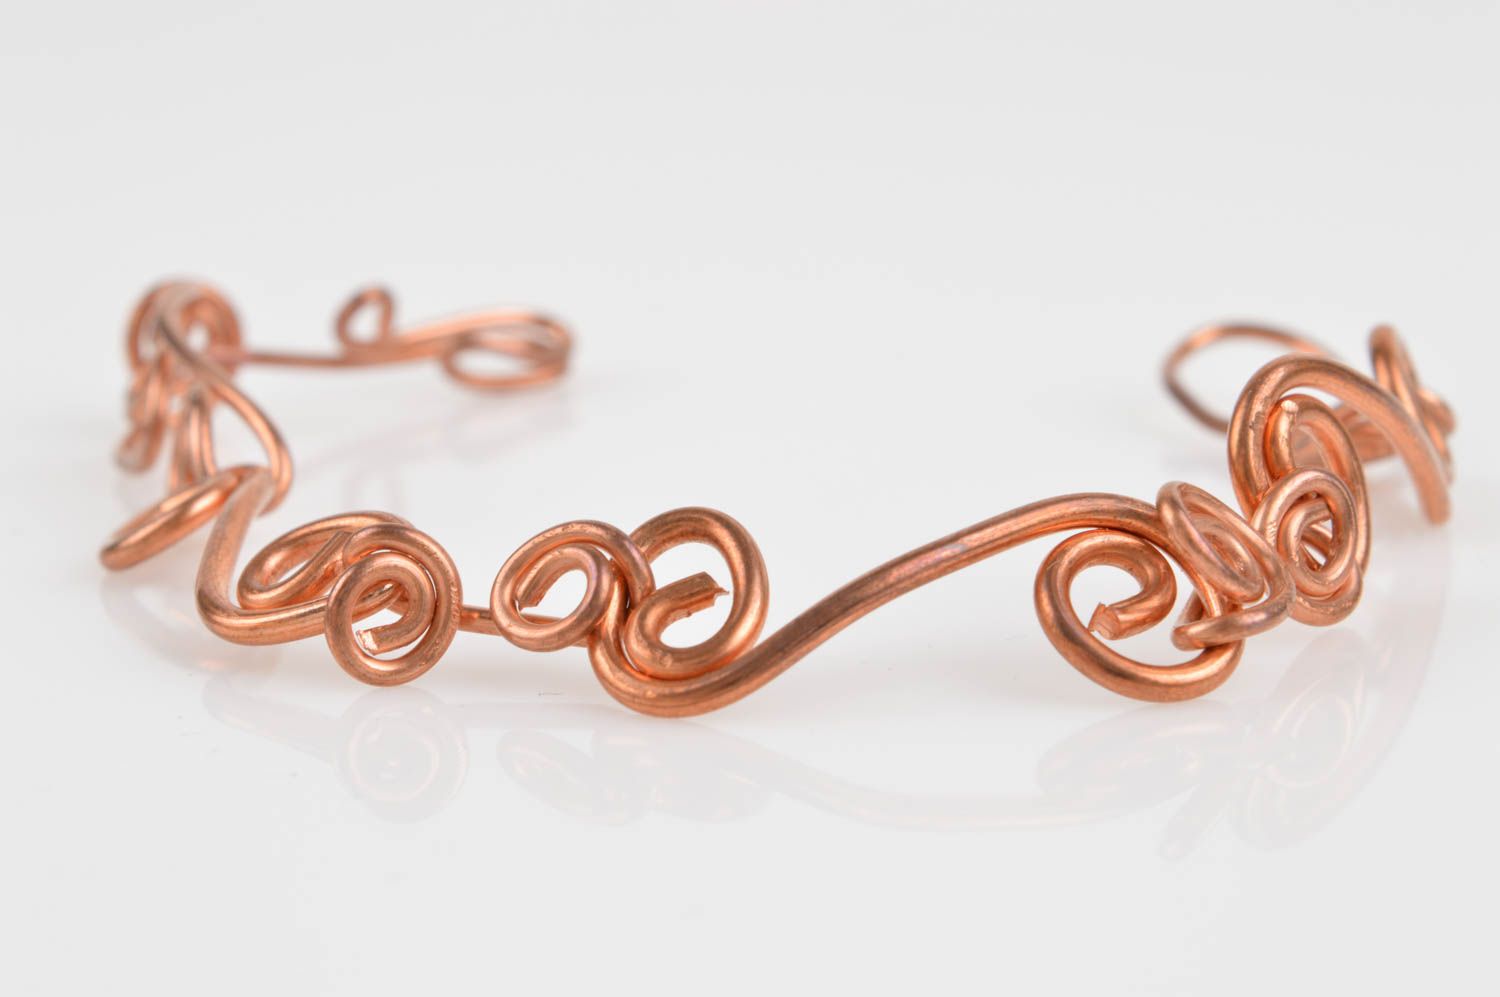 Copper bracelet designer accessories handmade jewelry womens bracelet gift ideas photo 5